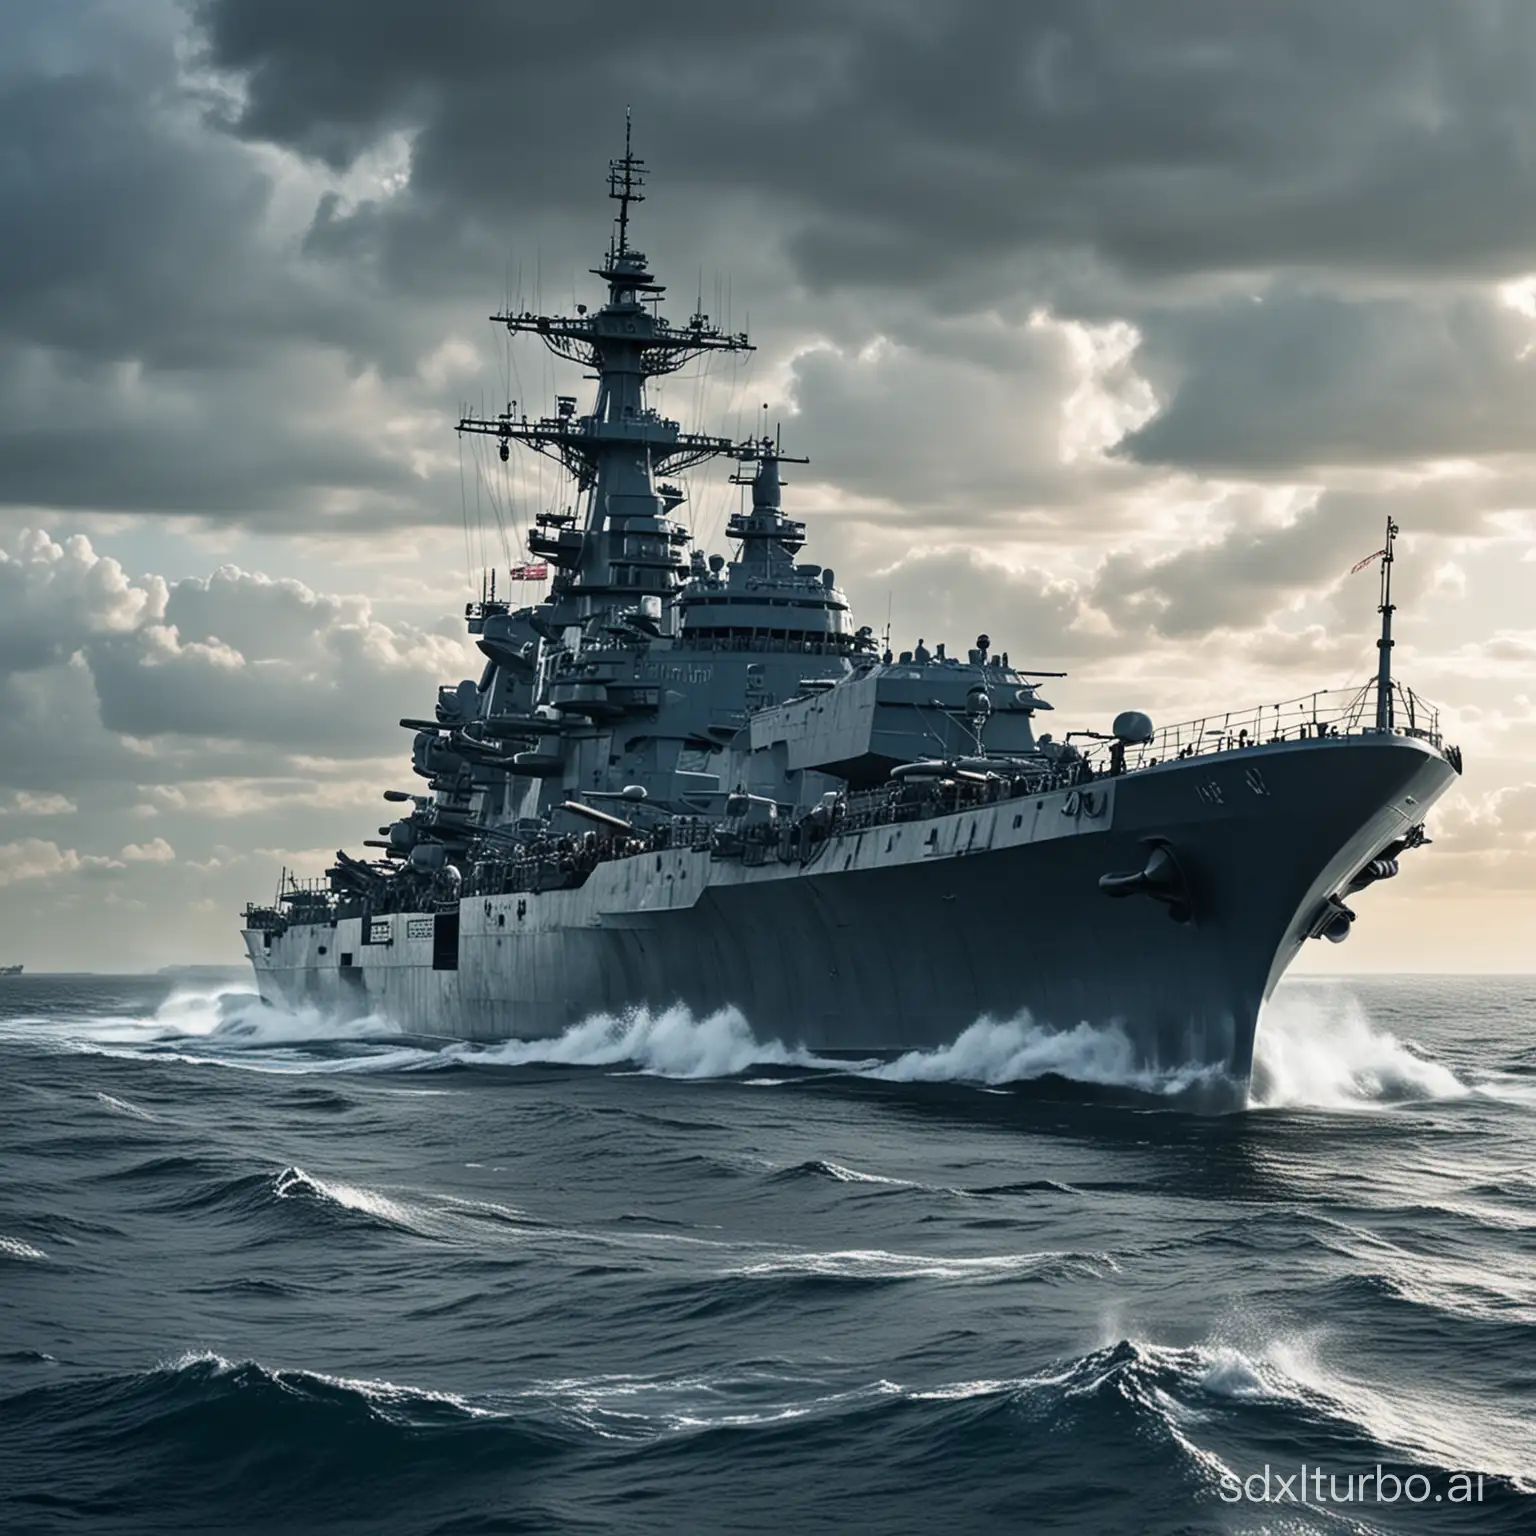 Intense-Naval-Battleship-Confrontation-at-Dusk